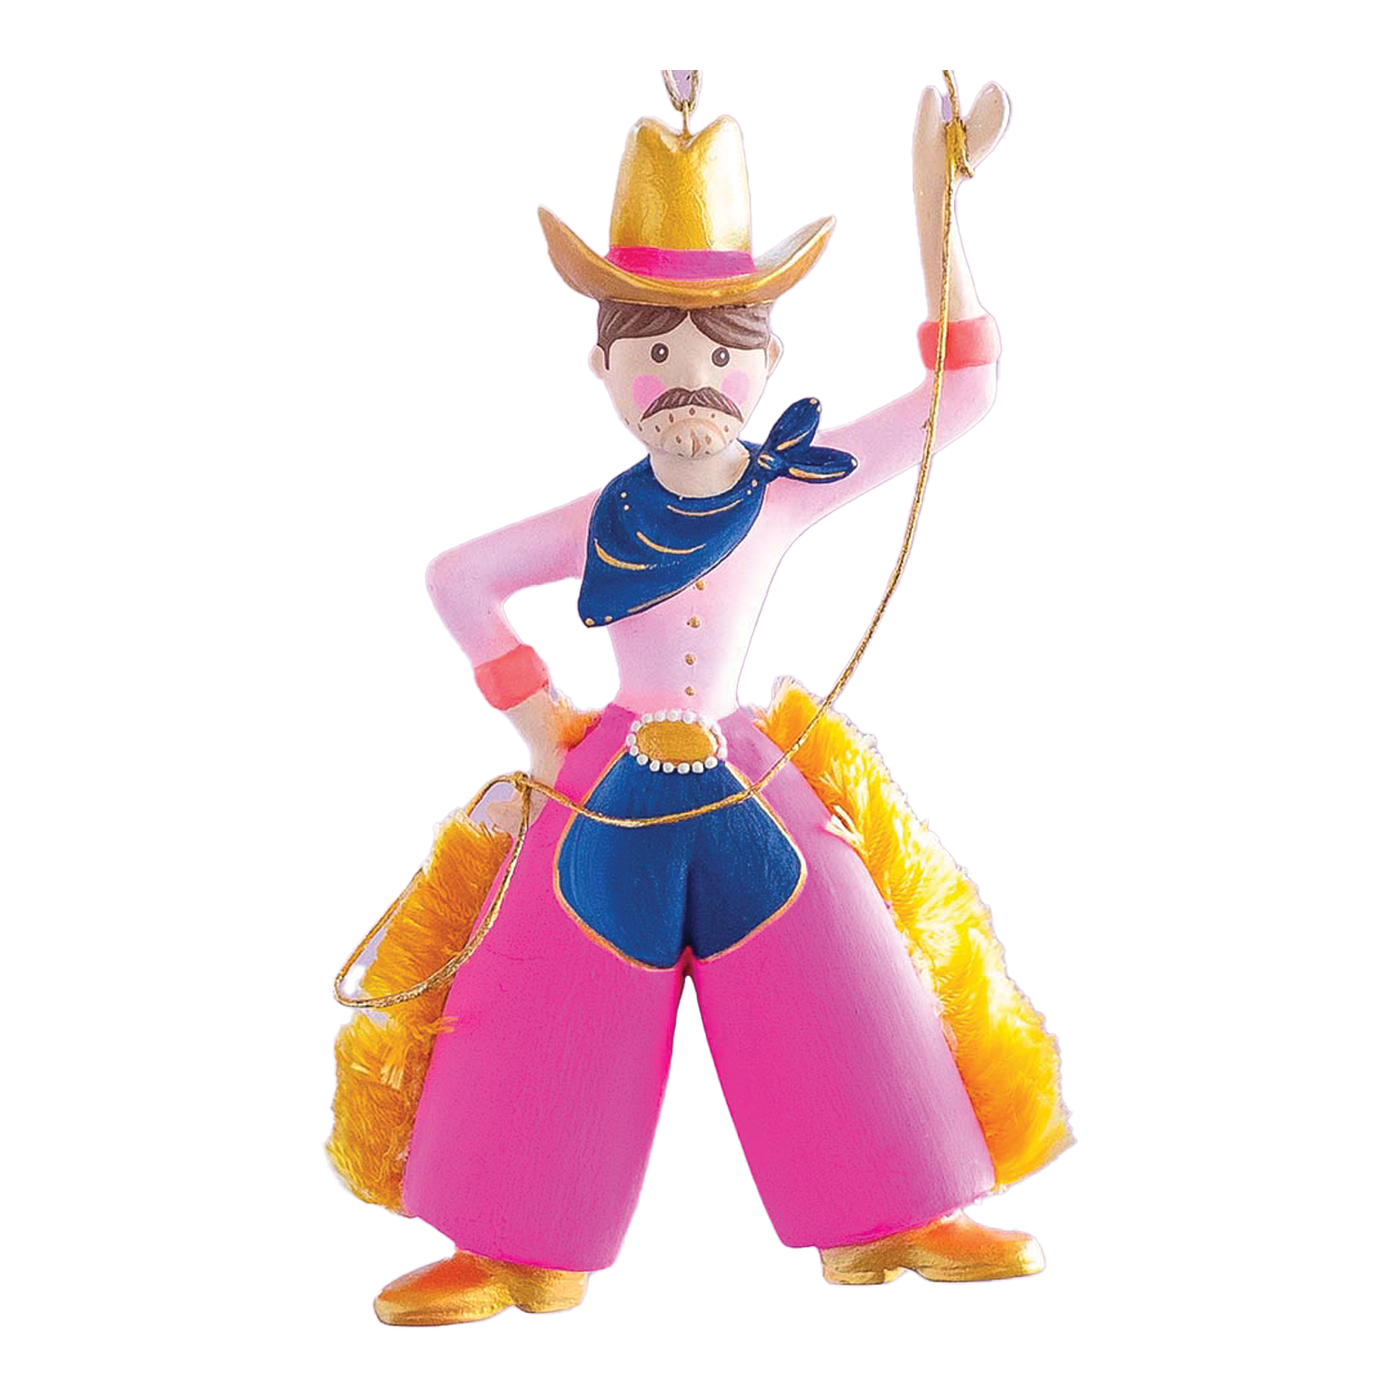 Pinky Pete Cowboy Ornament - Pink